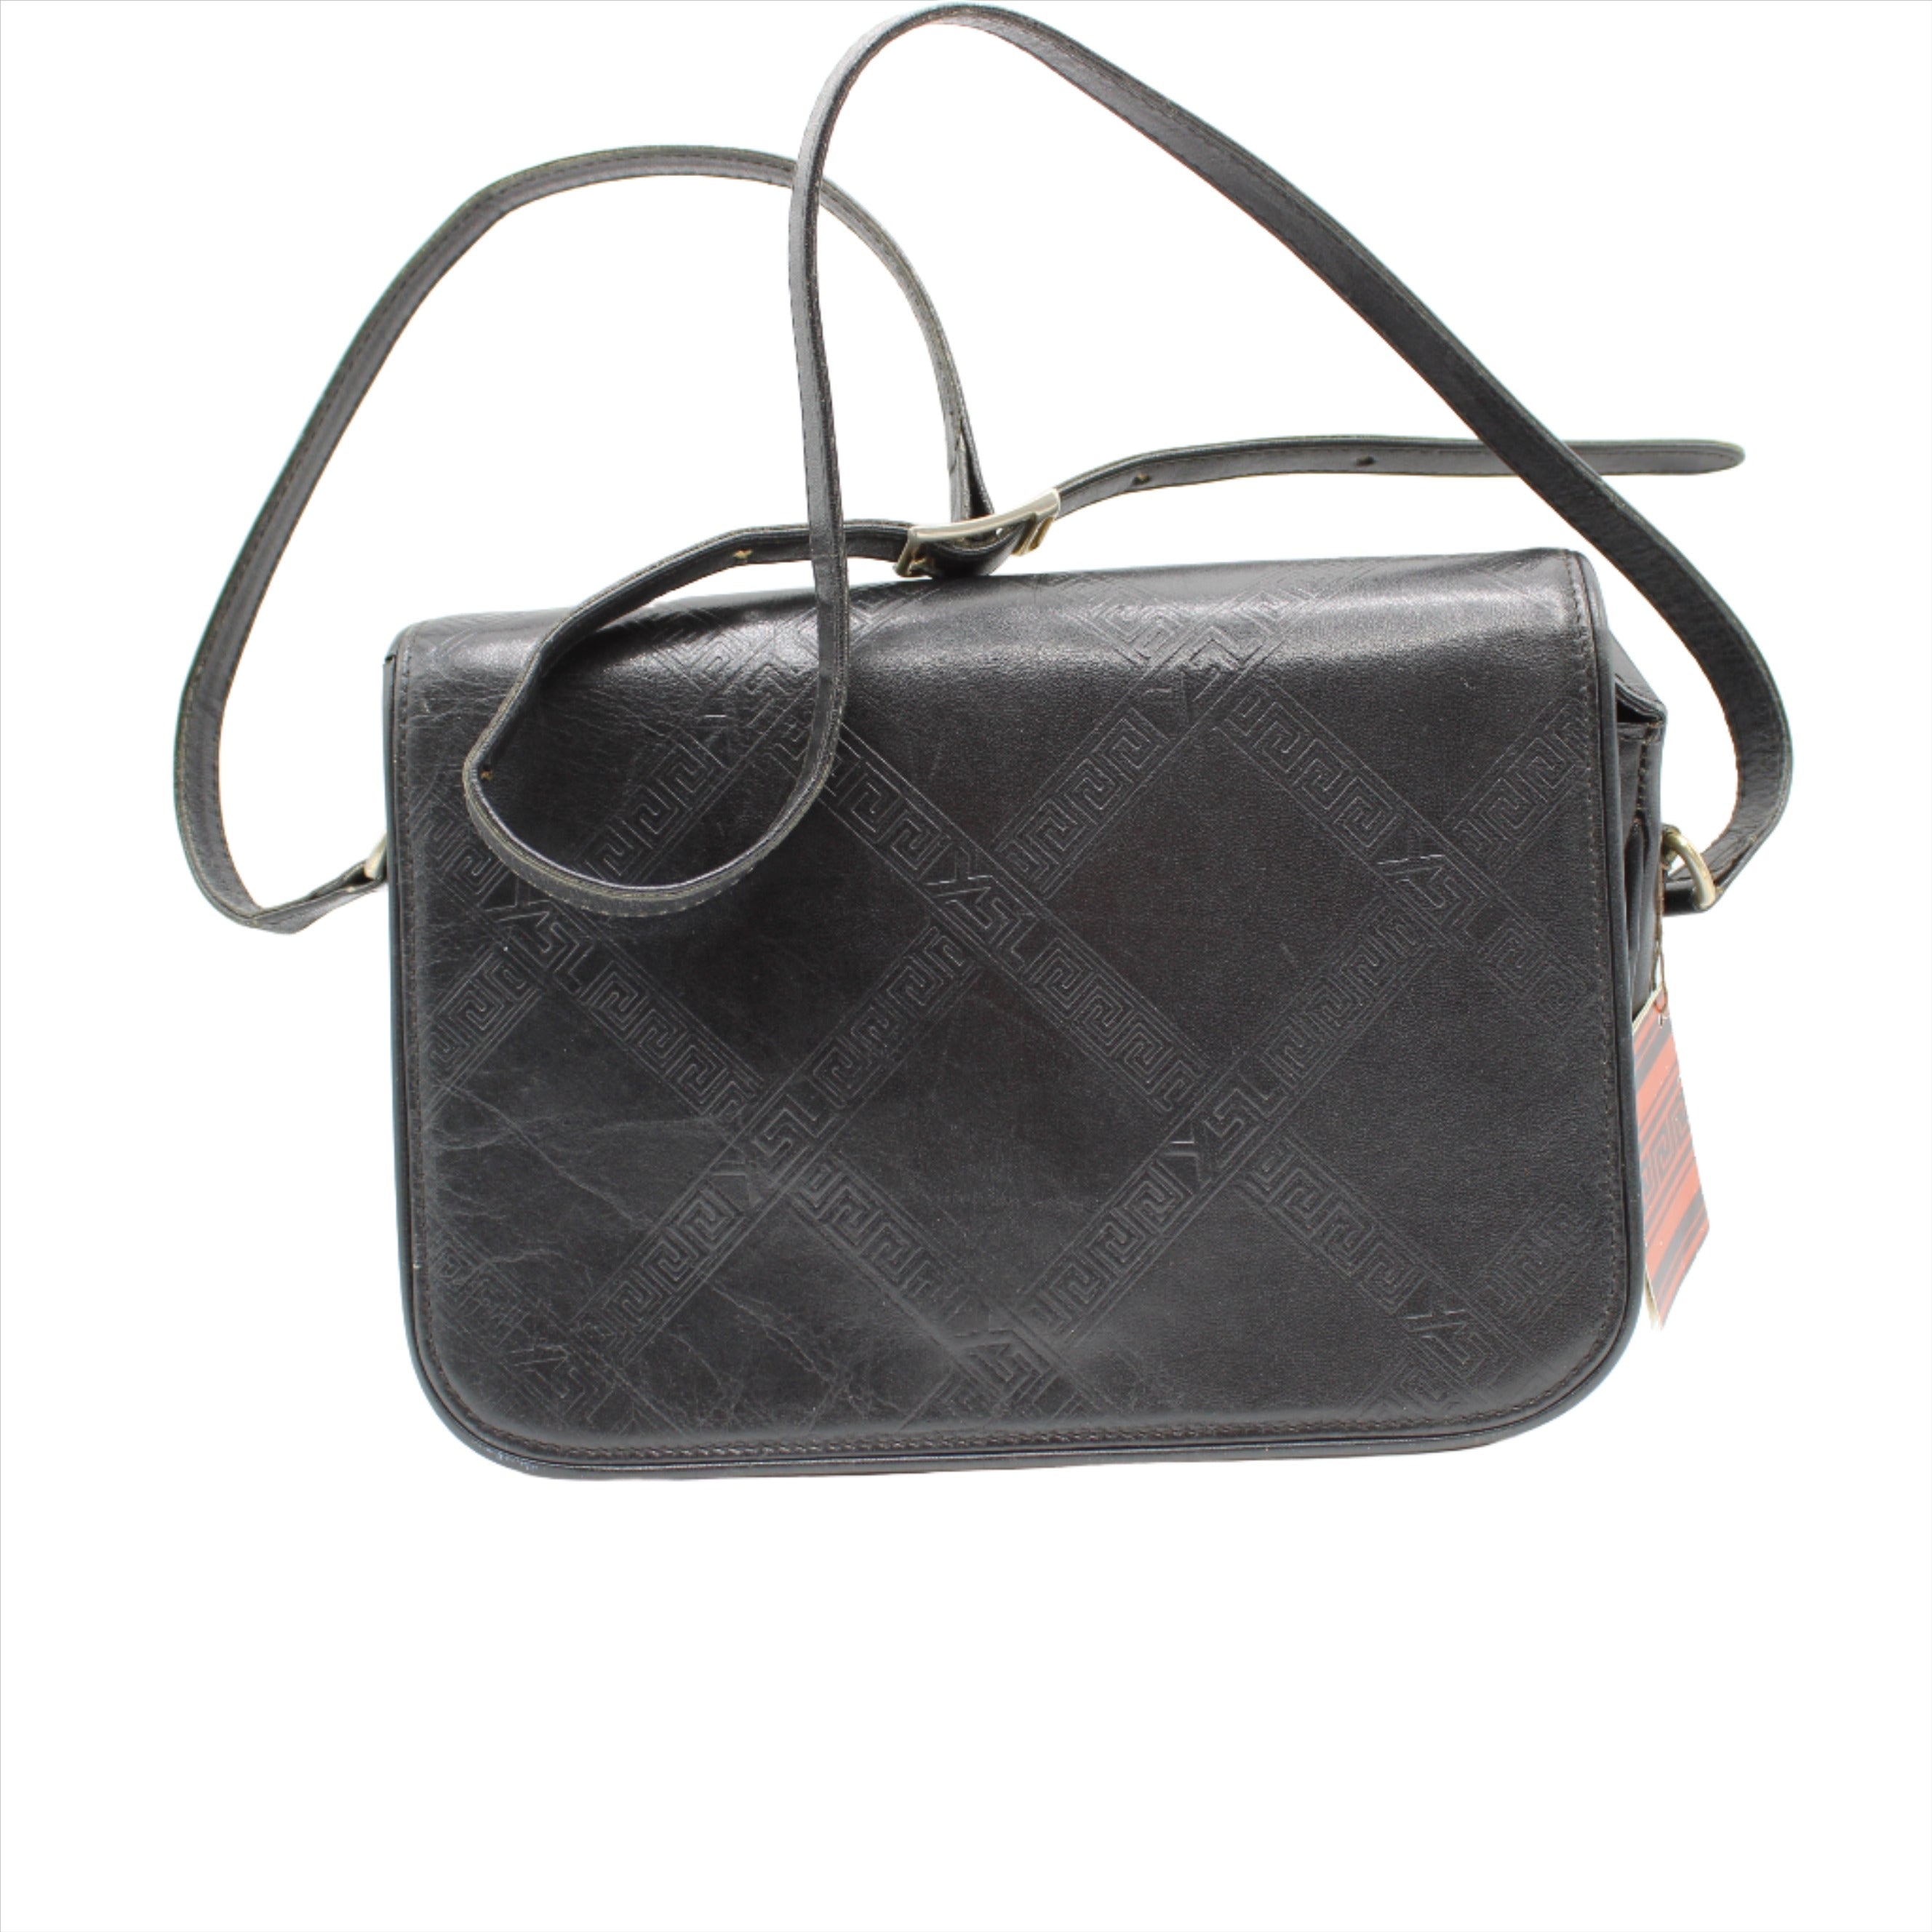 Yves Saint Laurent Black Embossed Leather Crossbody Bag